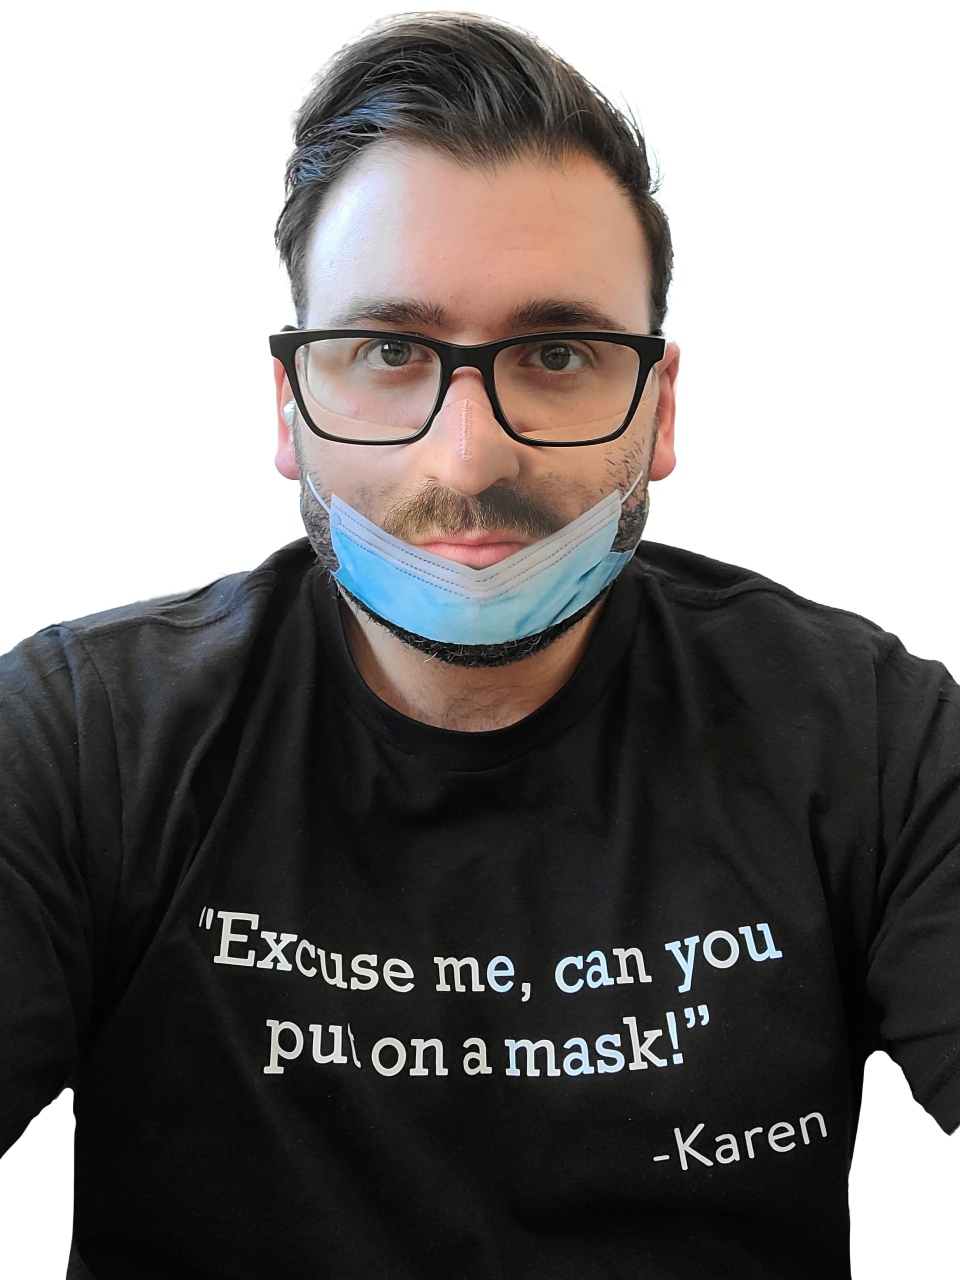 Mask video causes TikTok sensation